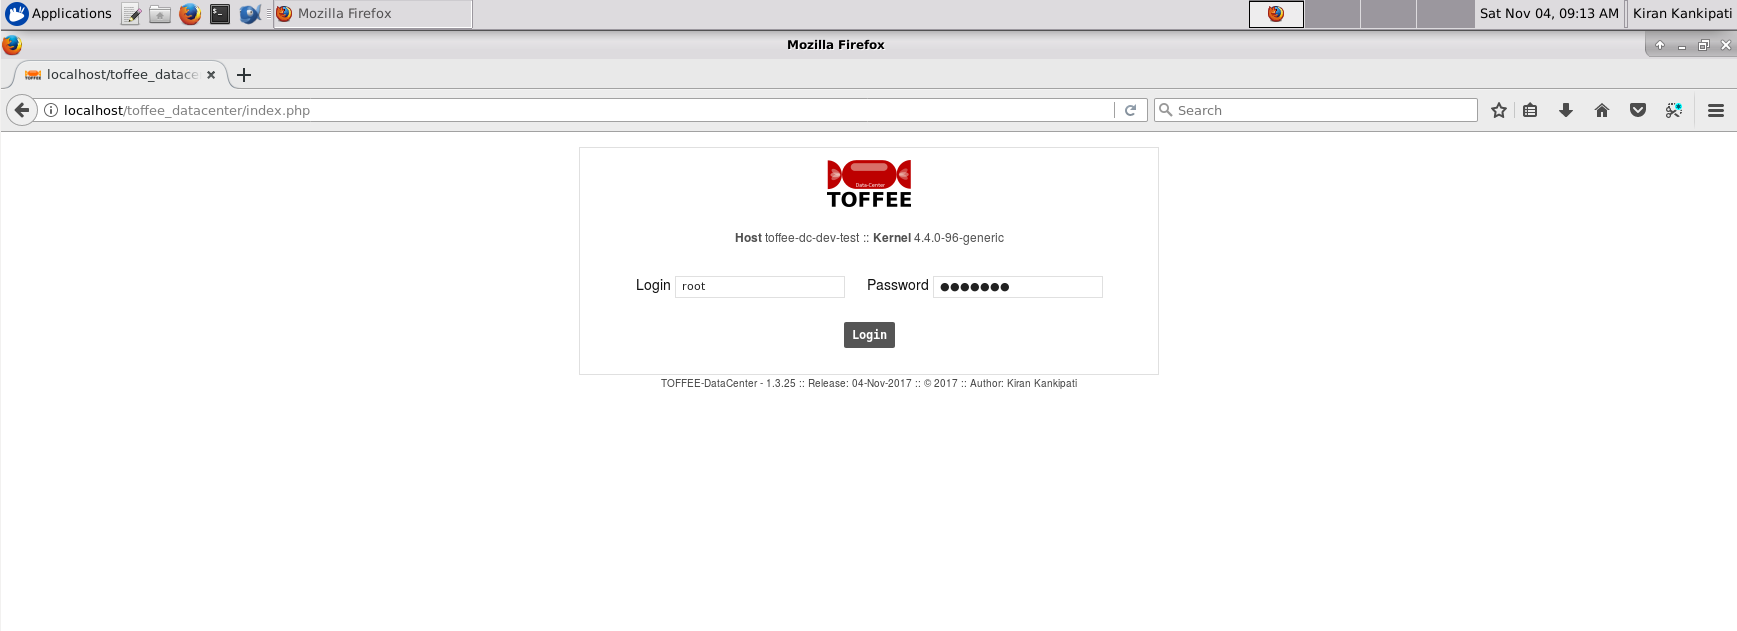 TOFFEE-DATACENTER WAN Optimization network stack - Login Page